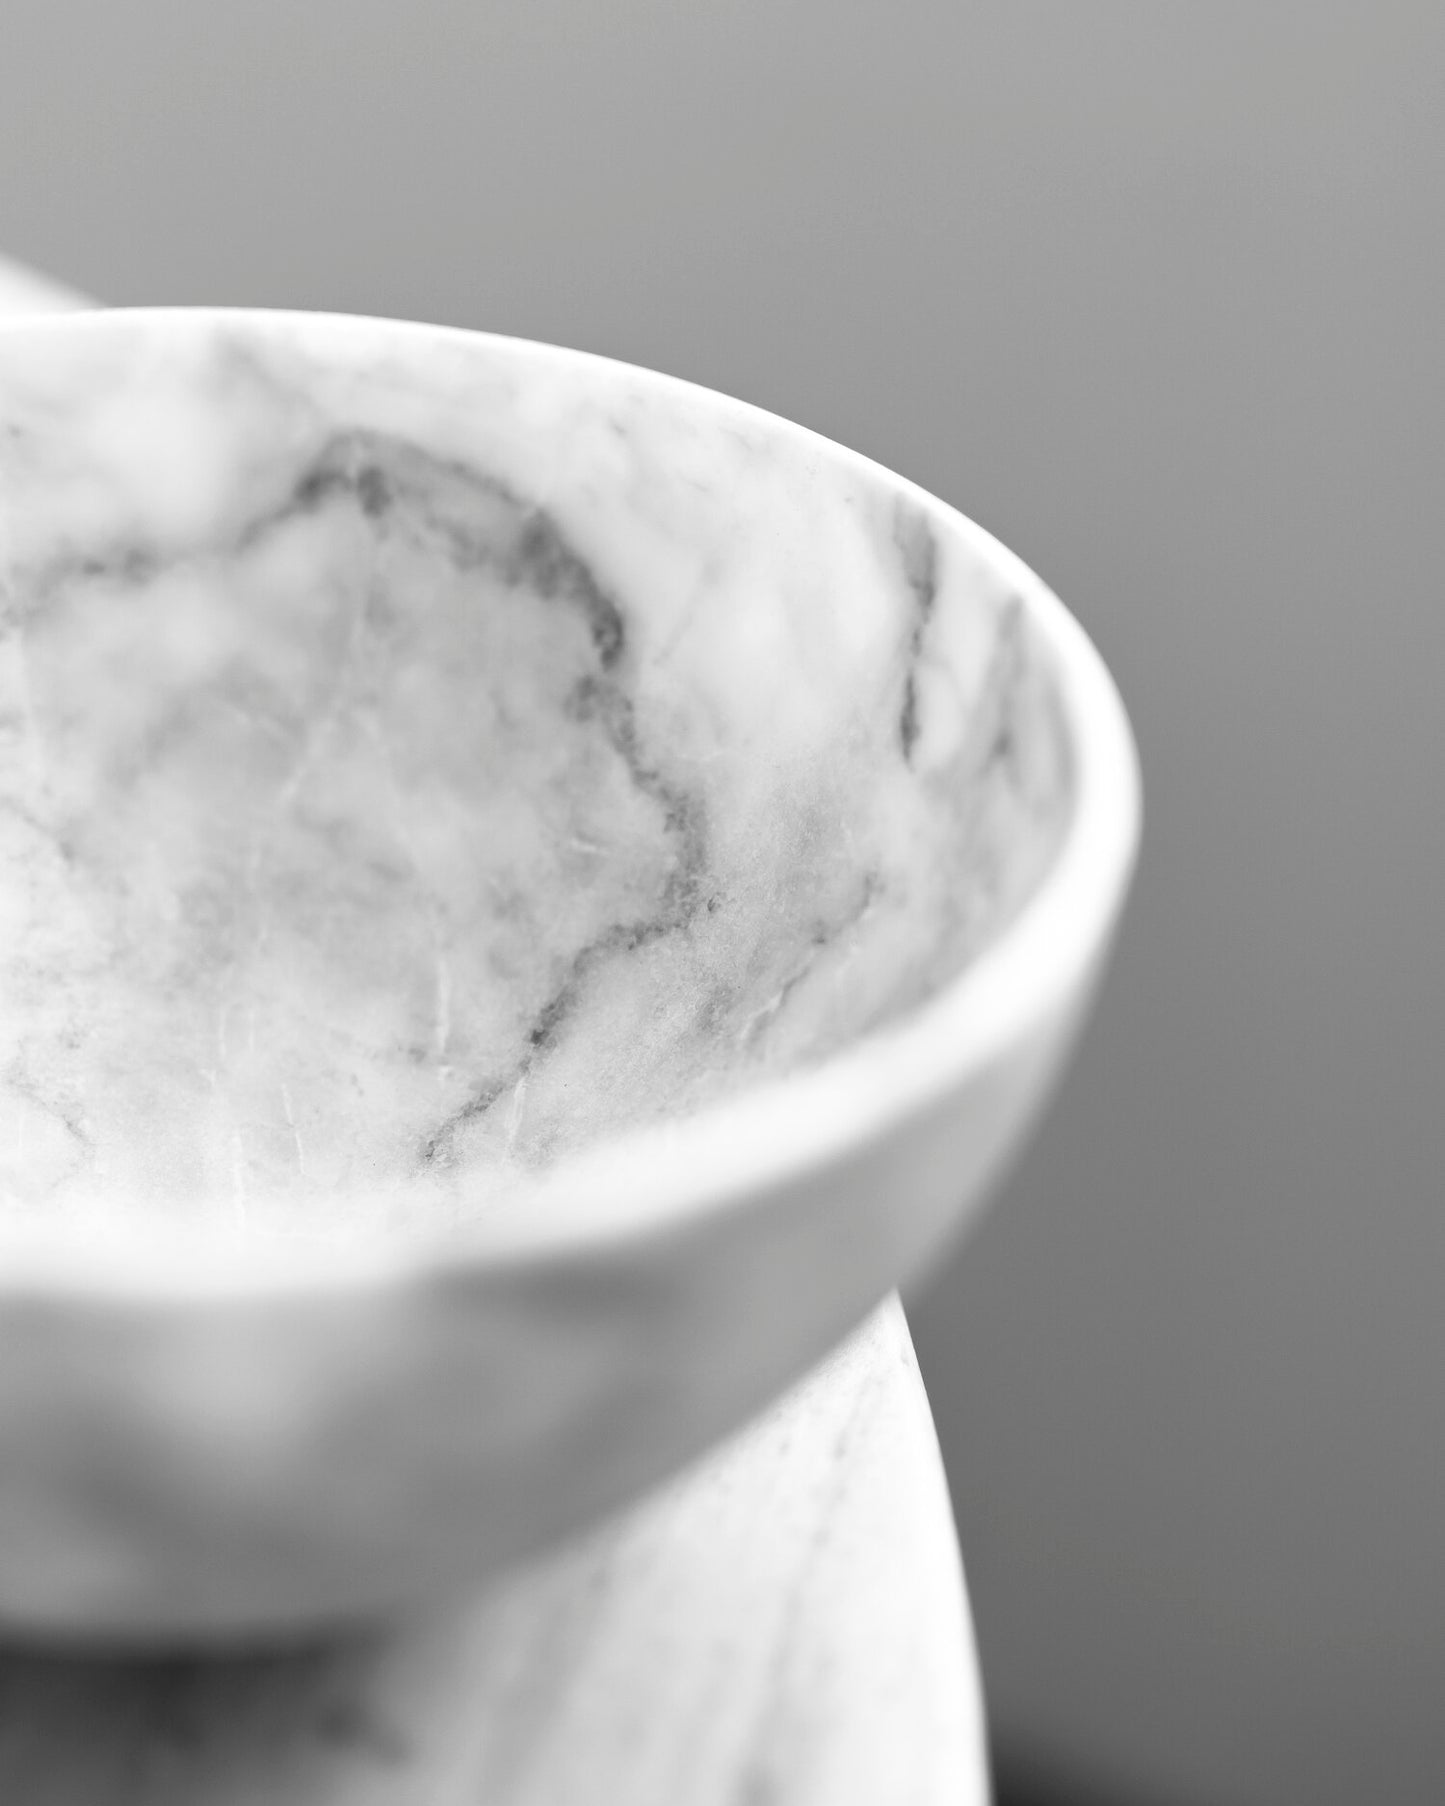 Grande bowl in white marble detail